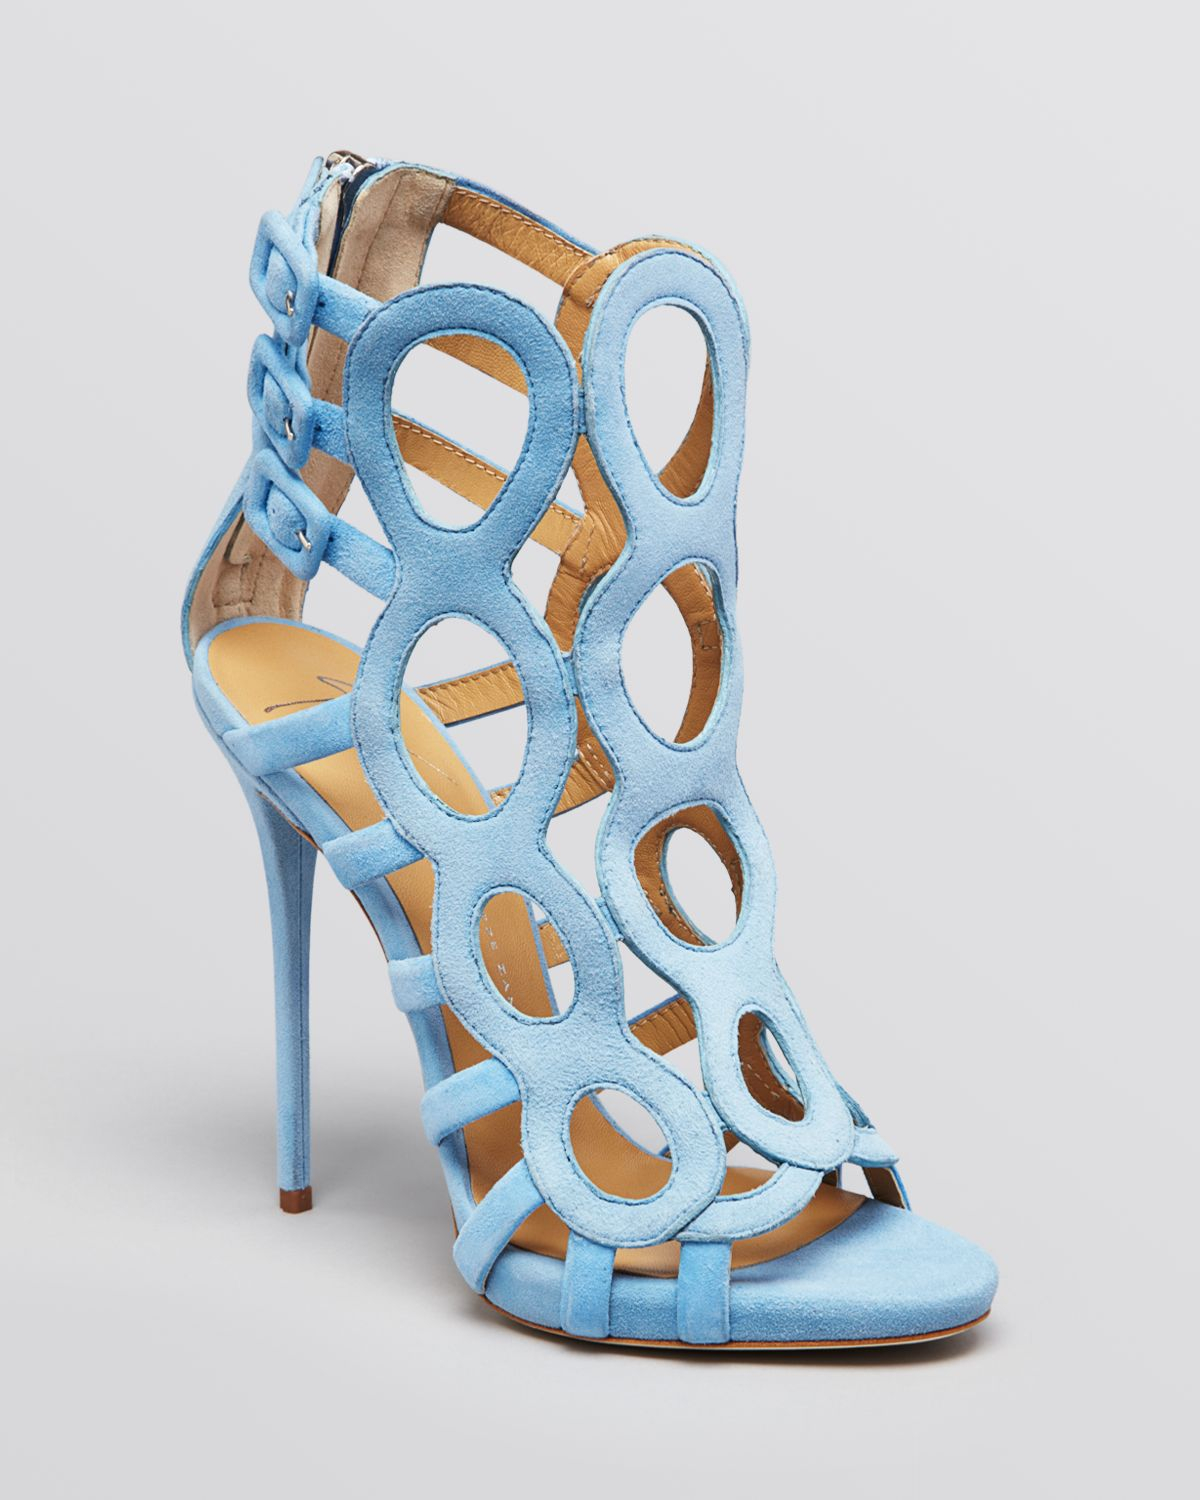 pale blue strappy heels